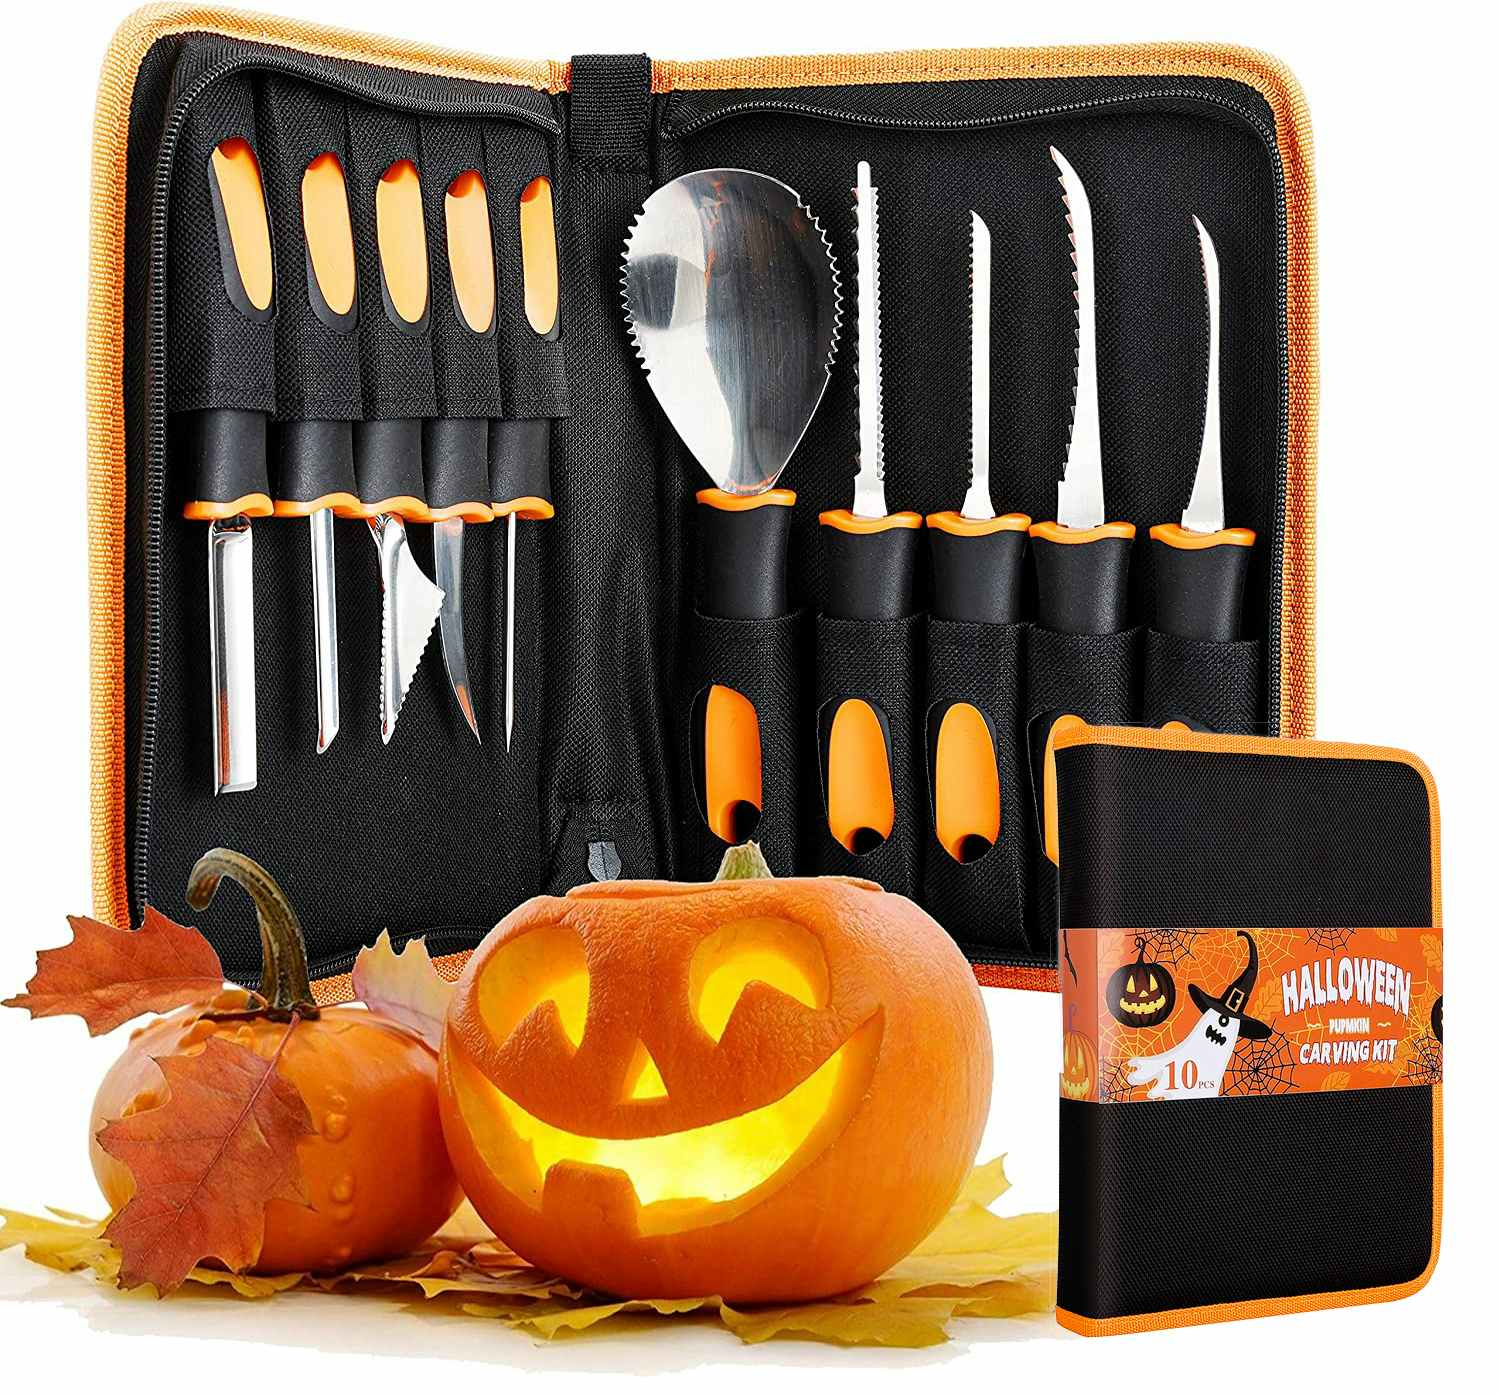 Luditek Halloween Pumpkin Carving Tools, Halloween Jack-O-Lanterns 11 Piece  Professional Stainless Steel Pumpkin Carving Kit, Pumpkin Cutting Supplies